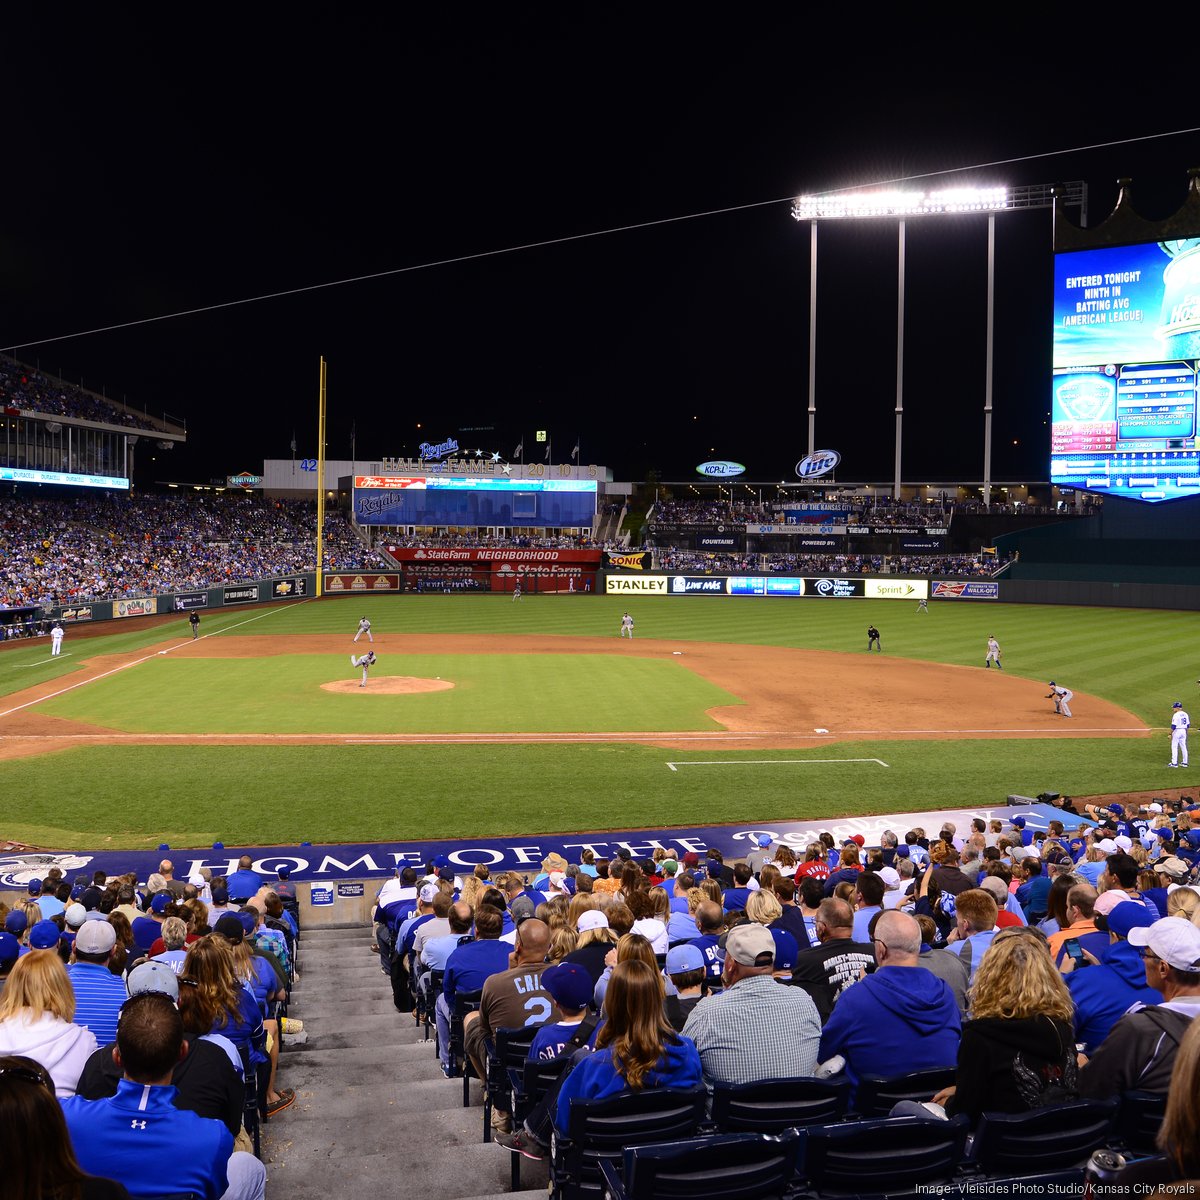 Kansas City Royals Panoramic Poster - 2015 World Series